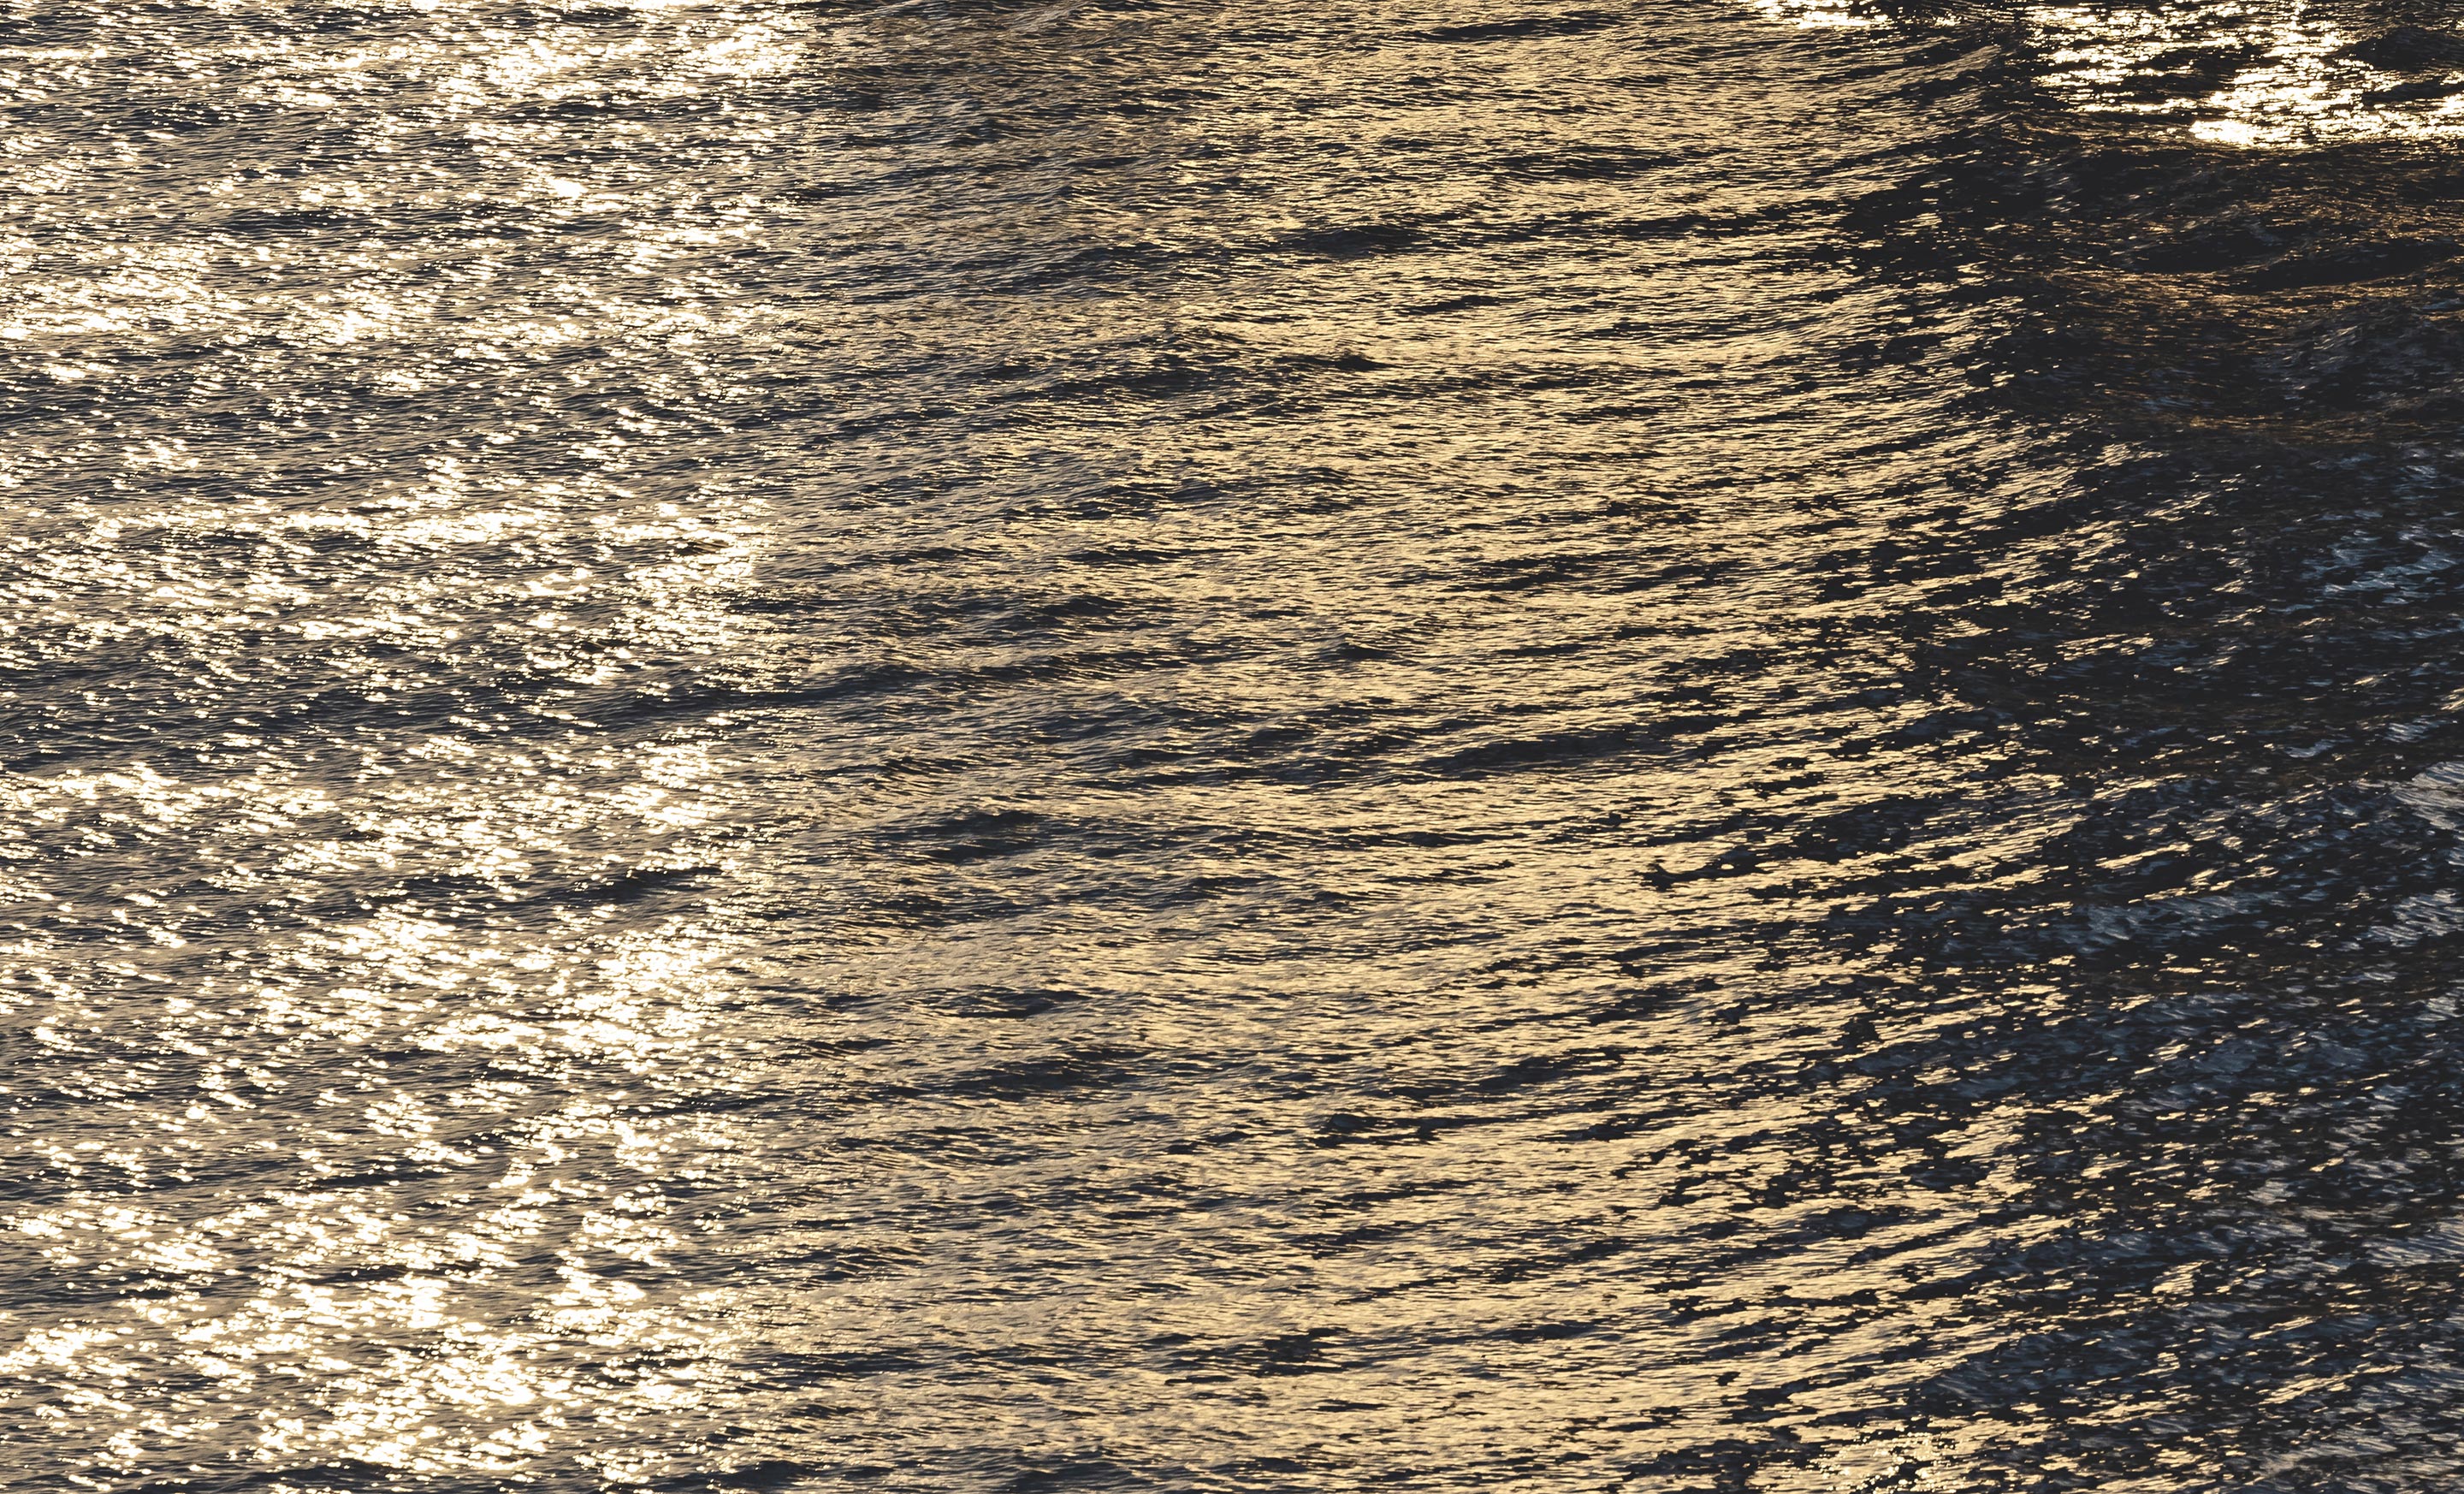 Sun reflecting on sea